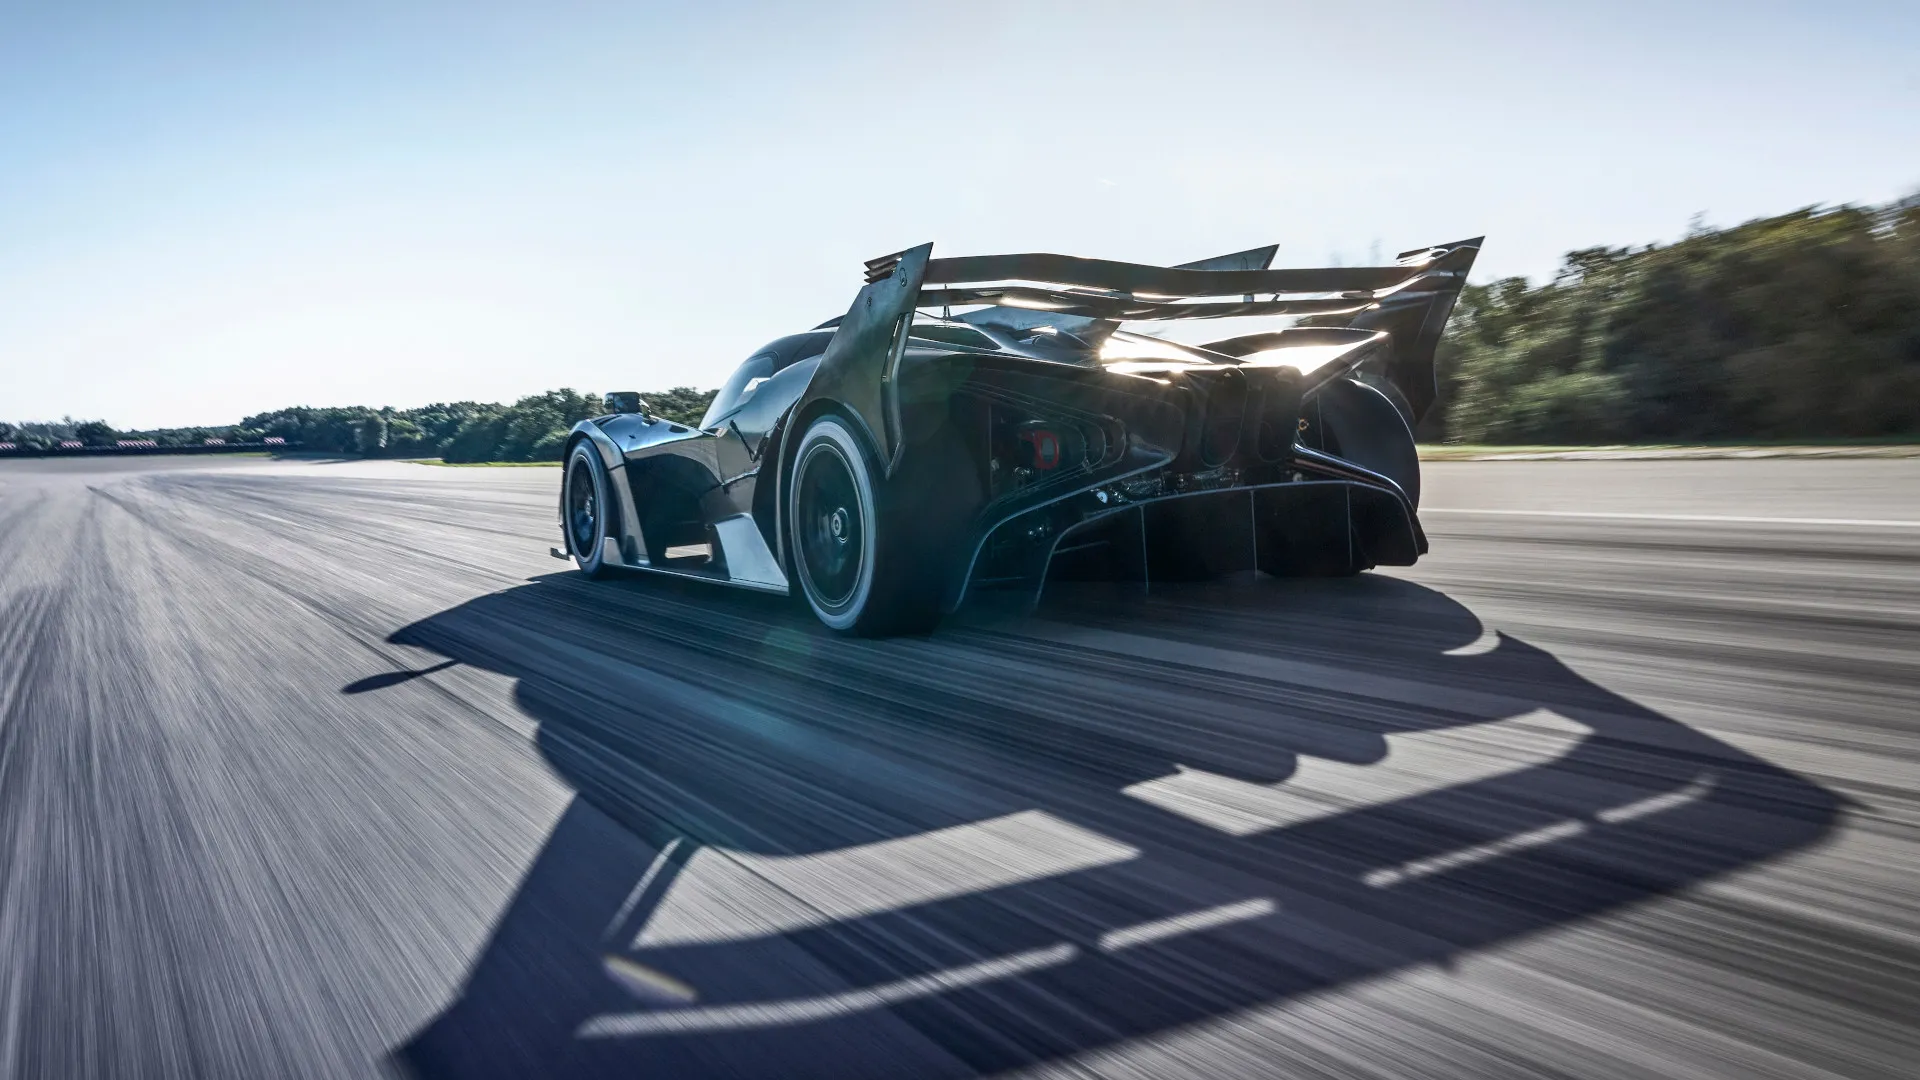 El Bugatti Bolide está listo para pasar a producción, pero no será tan rápido en recta como se prometió en un principio